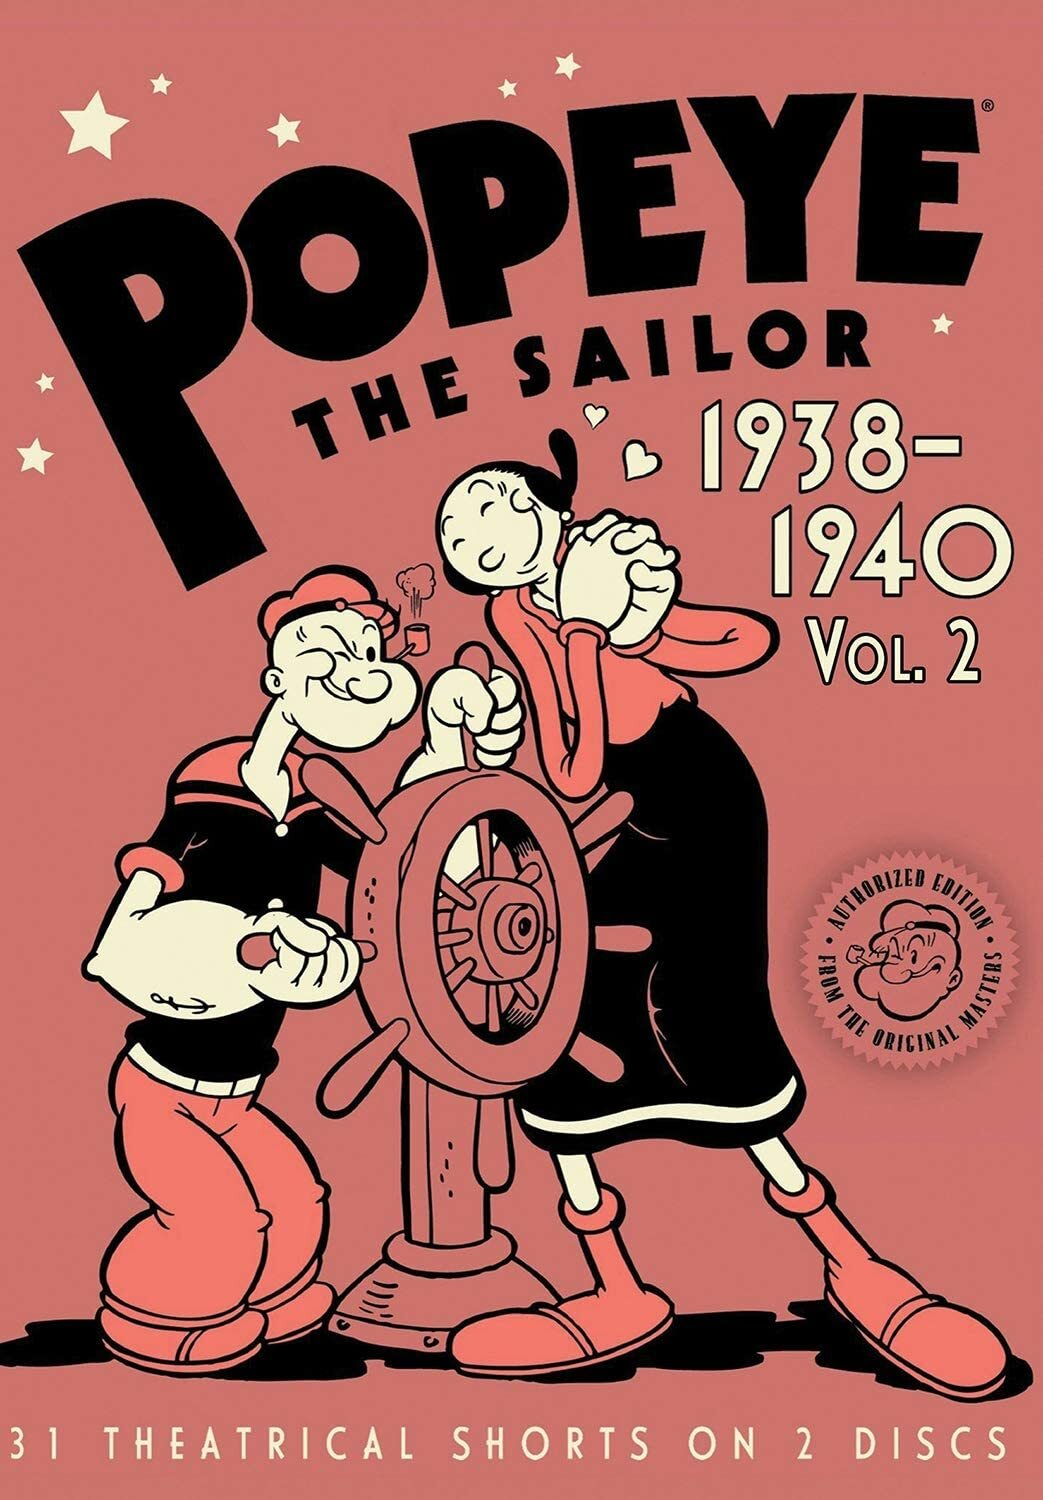 Popeye The Sailor VO DVDRIP x264 1938-1940